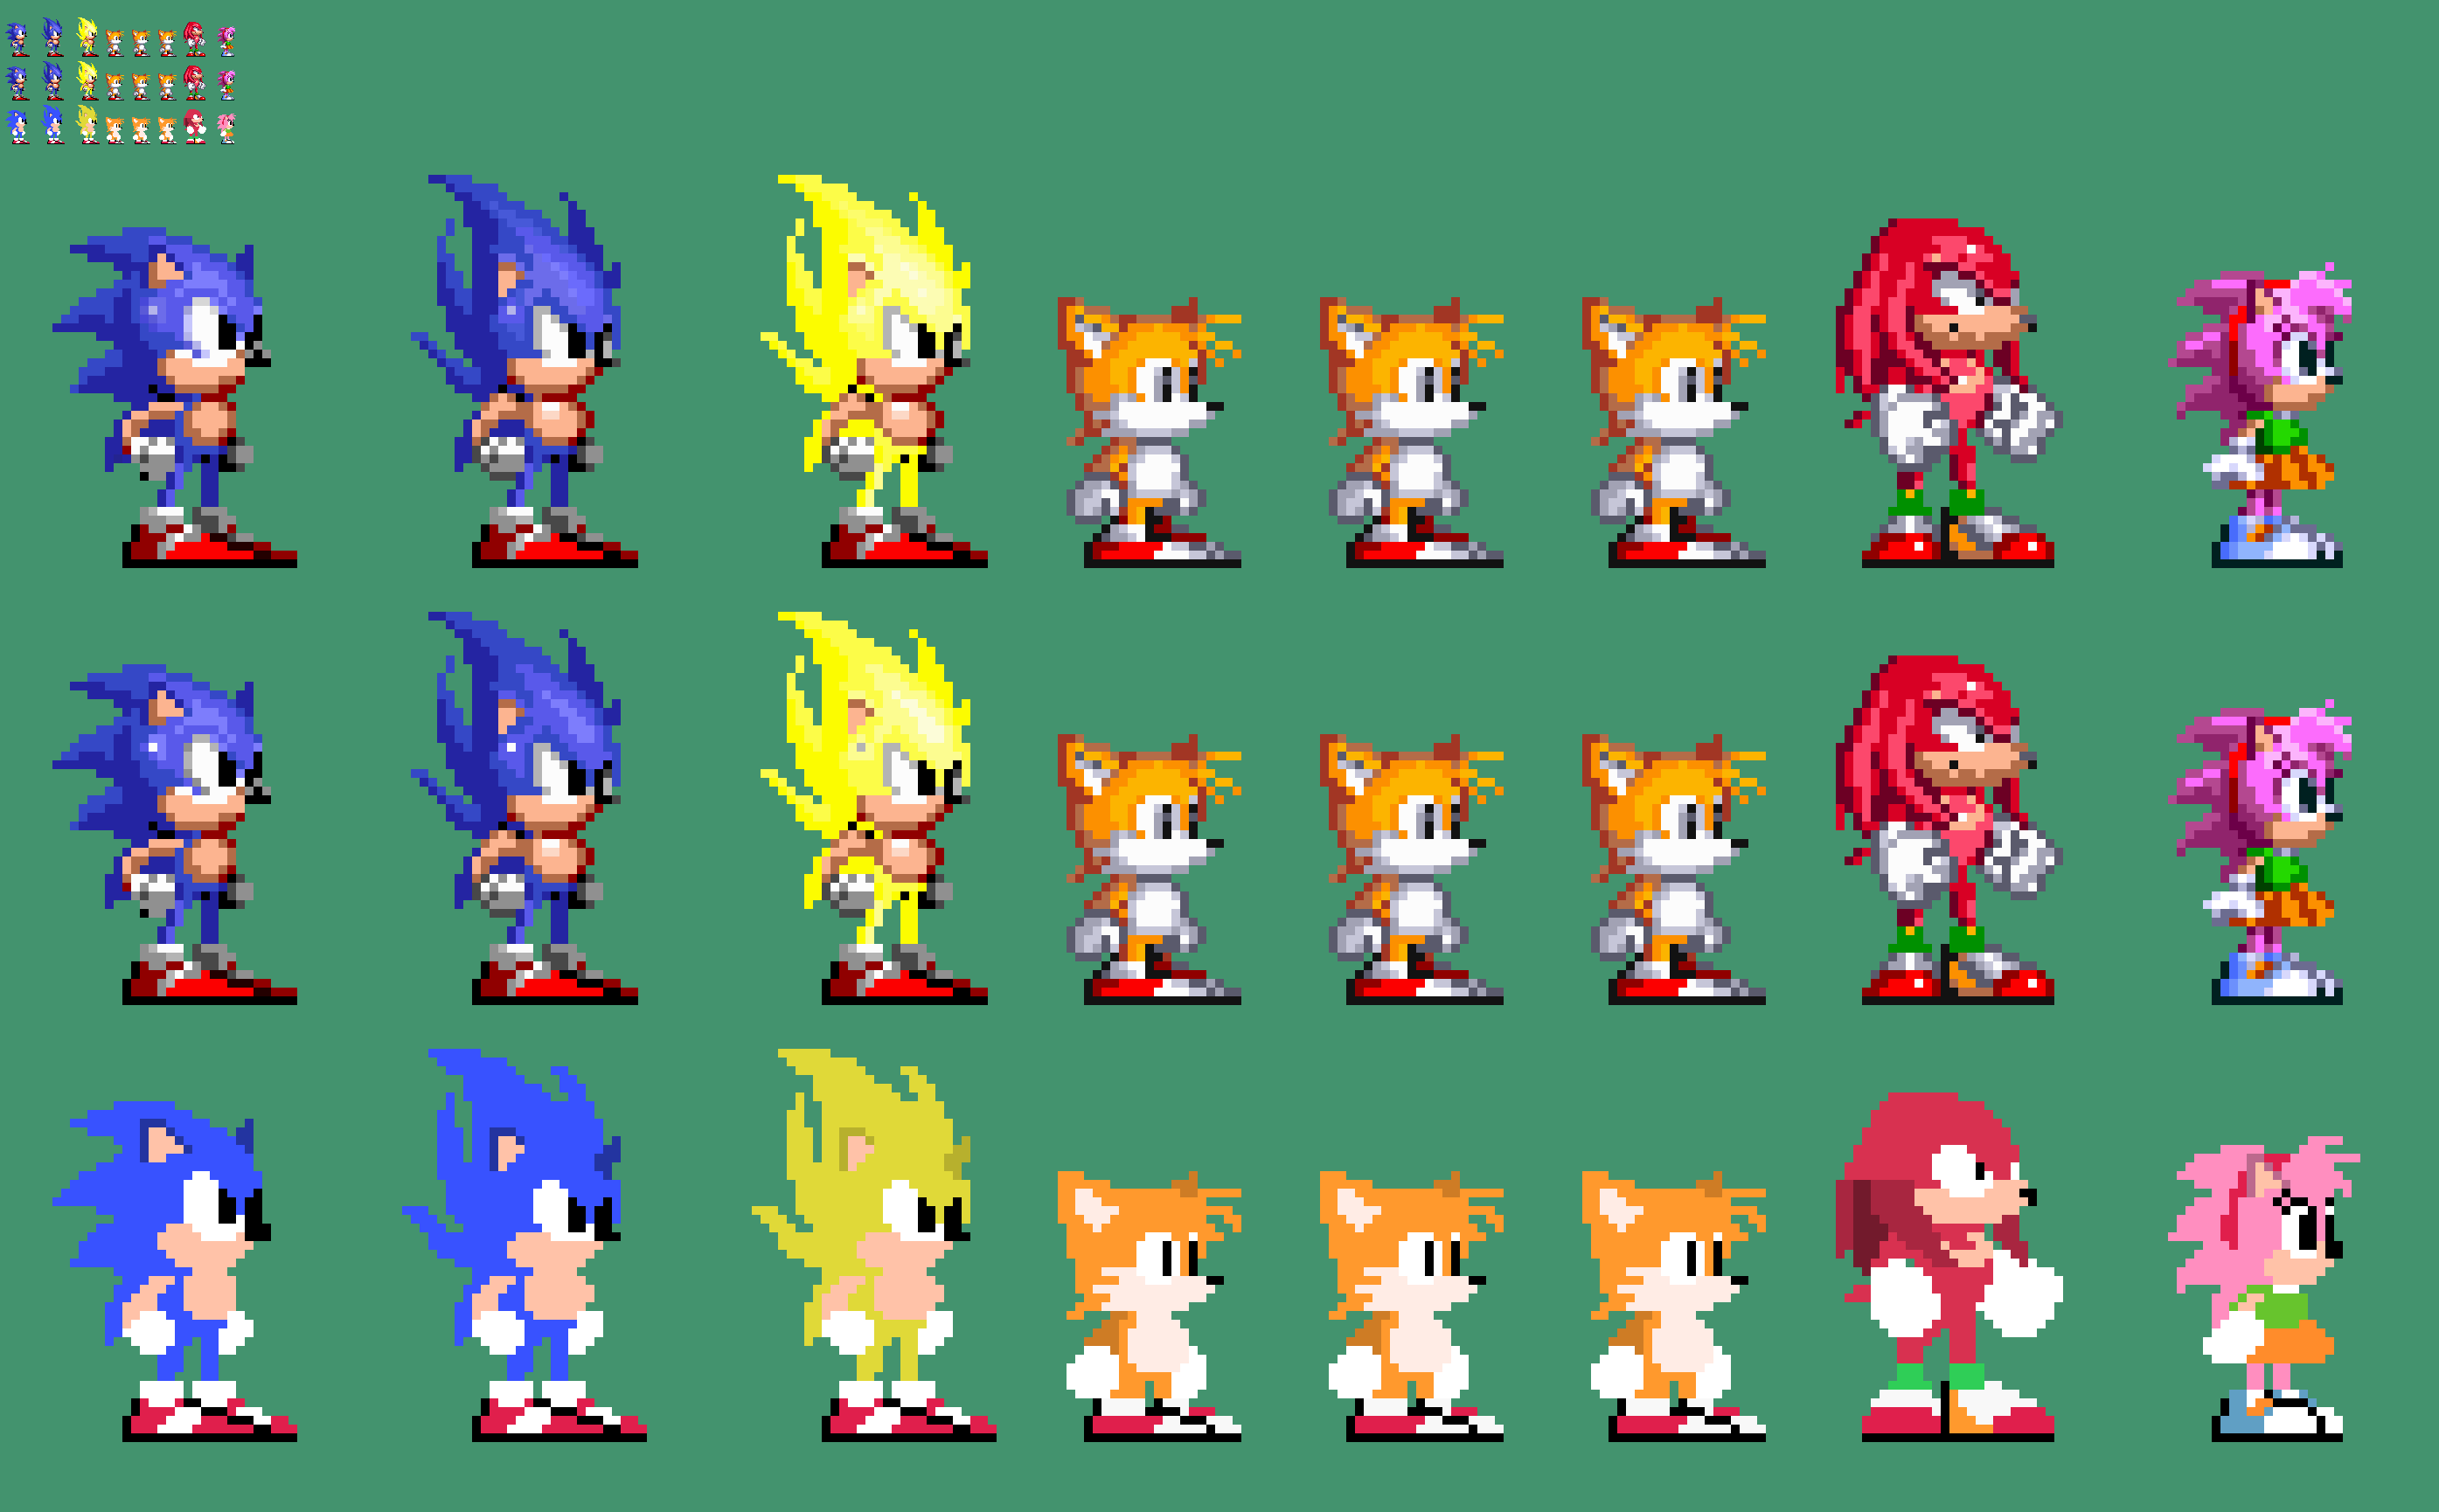 Sonic the Hedgehog (Mania/Origins ver.) by SN9DA on DeviantArt